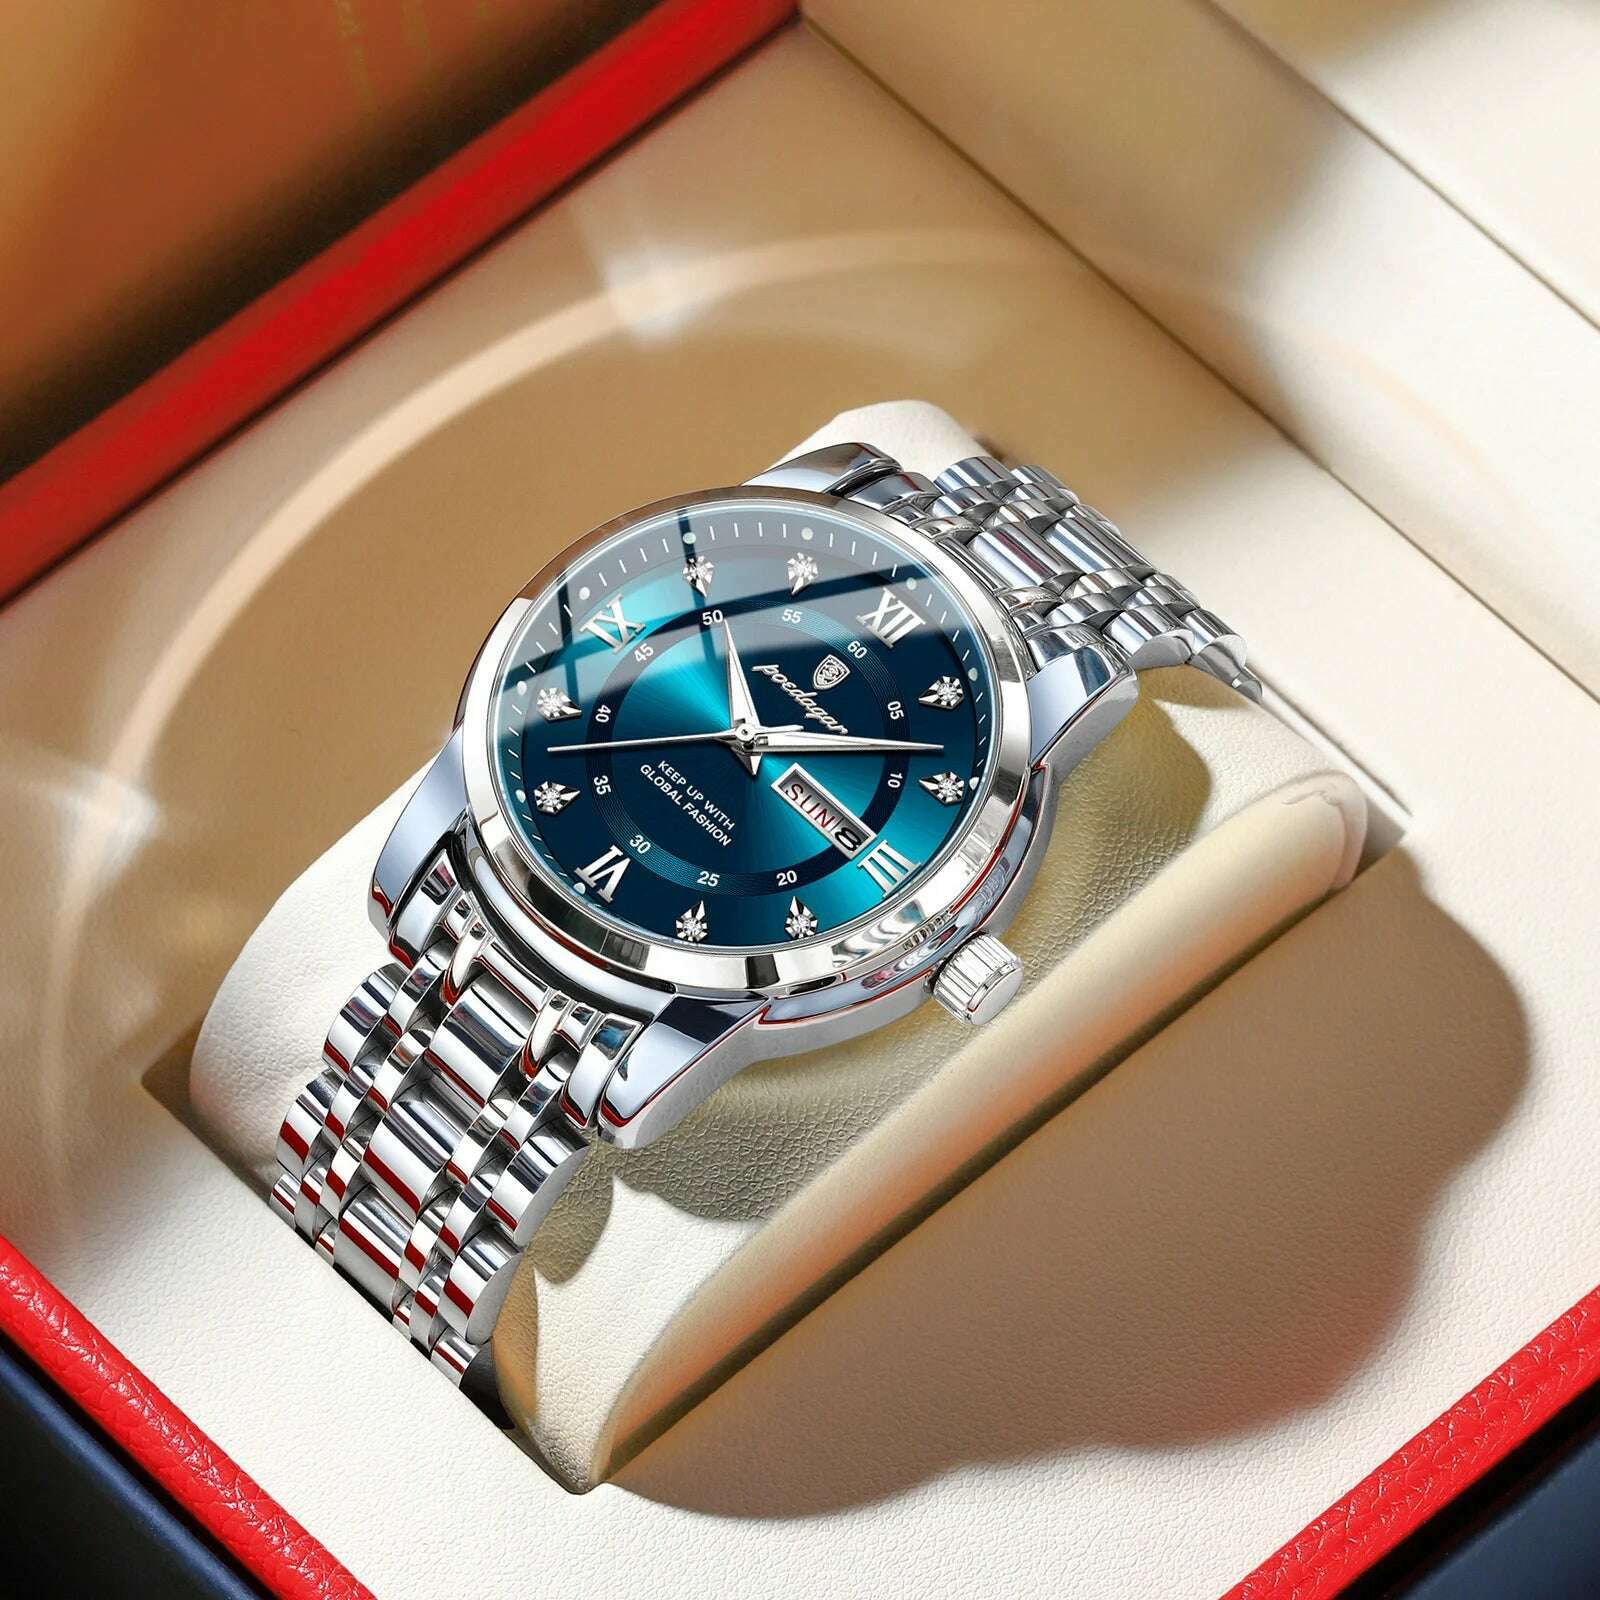 KIMLUD, POEDAGAR Luxury Watch for Man Elegant Date Week Waterproof Luminous Men Watch Quartz Stainless Steel Sports Men's Watches reloj, Silver Blue, KIMLUD Women's Clothes